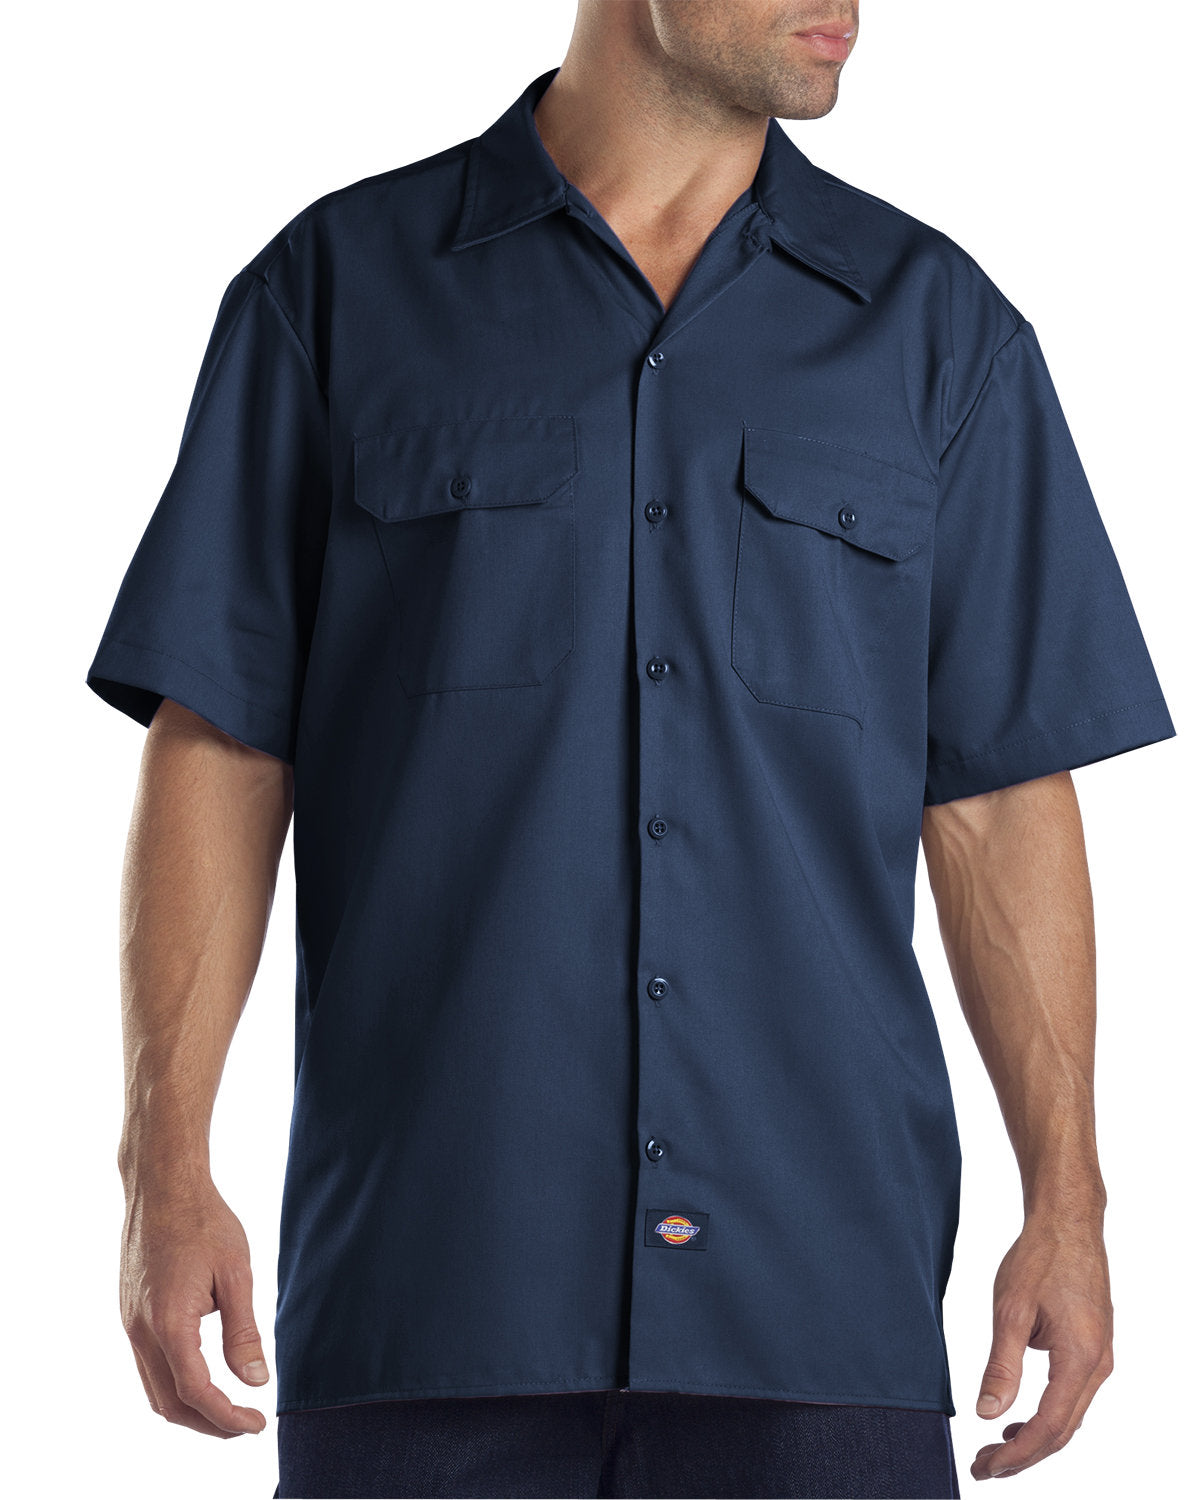 Dickies Men's Short-Sleeve Work Shirt Embroidered